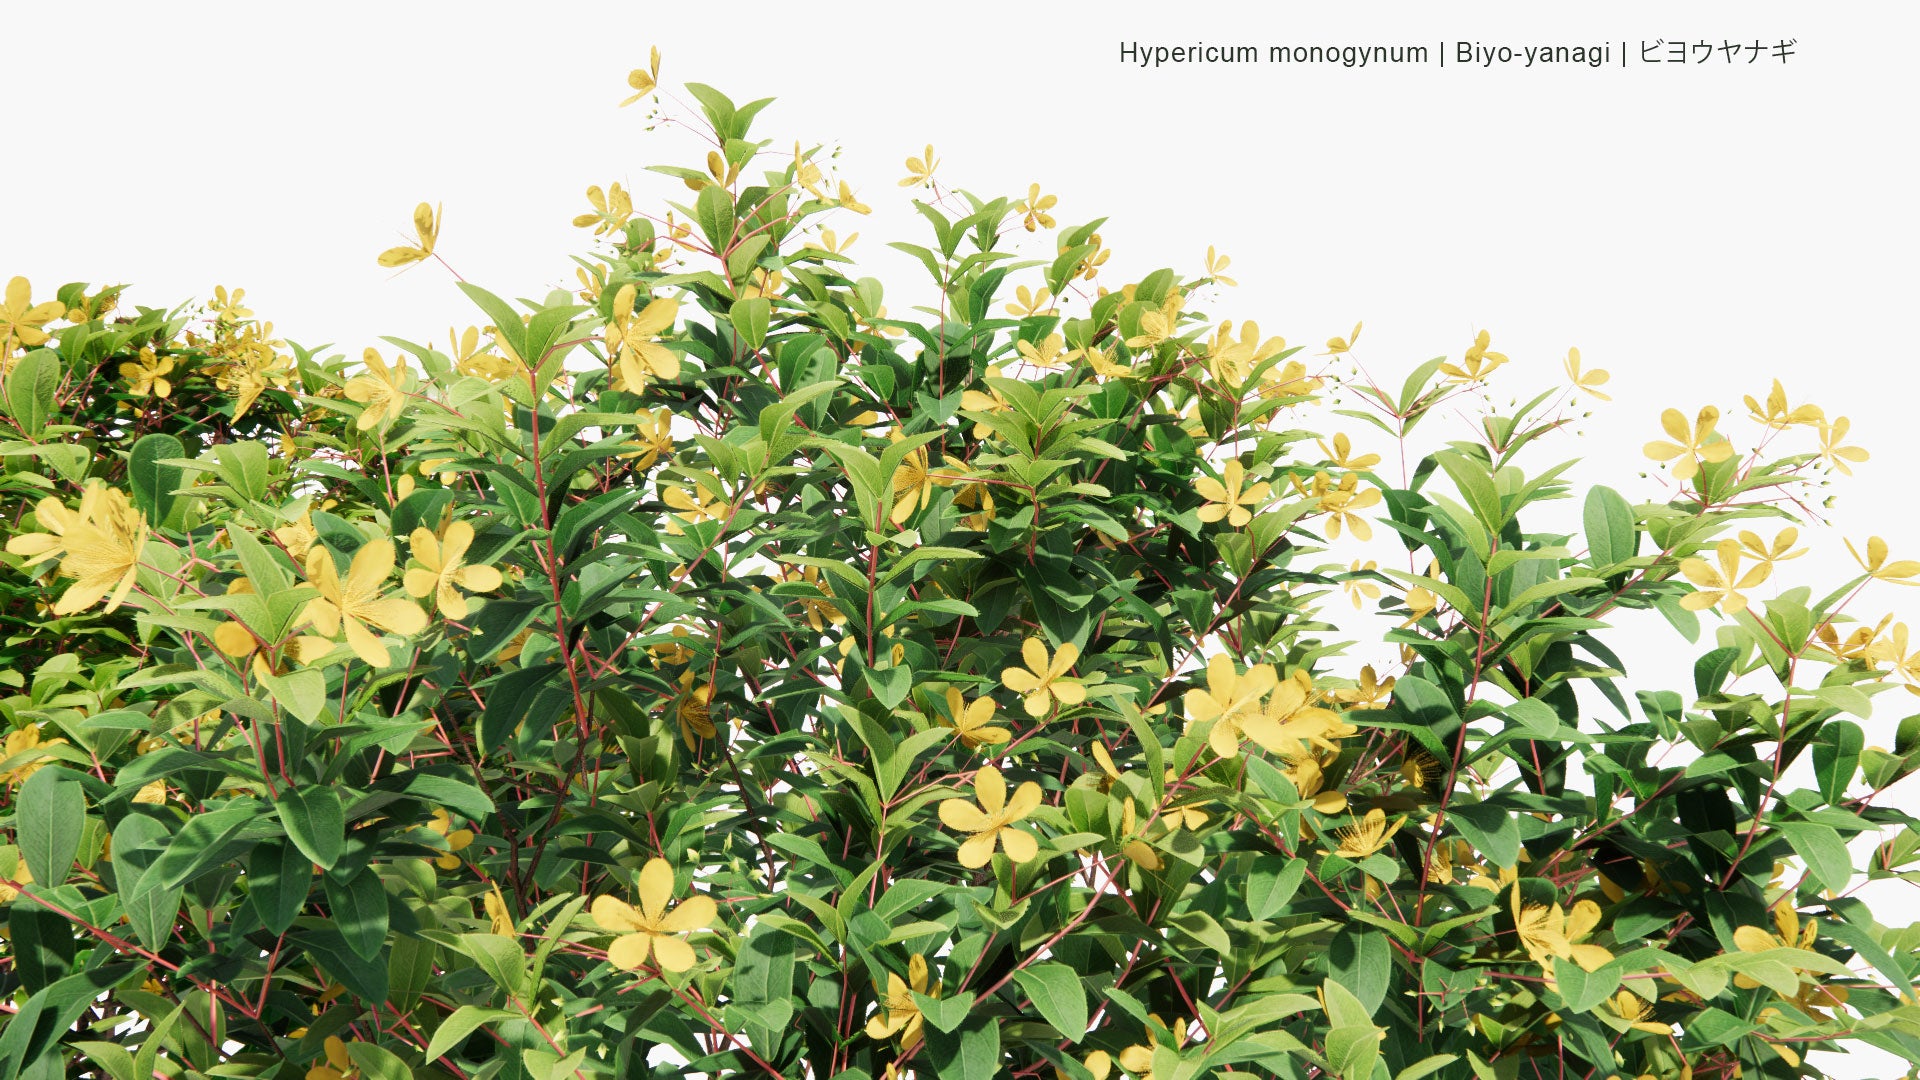 Low Poly Hypericum Monogynum - Biyo-Yanagi, ビヨウヤナギ (3D Model)